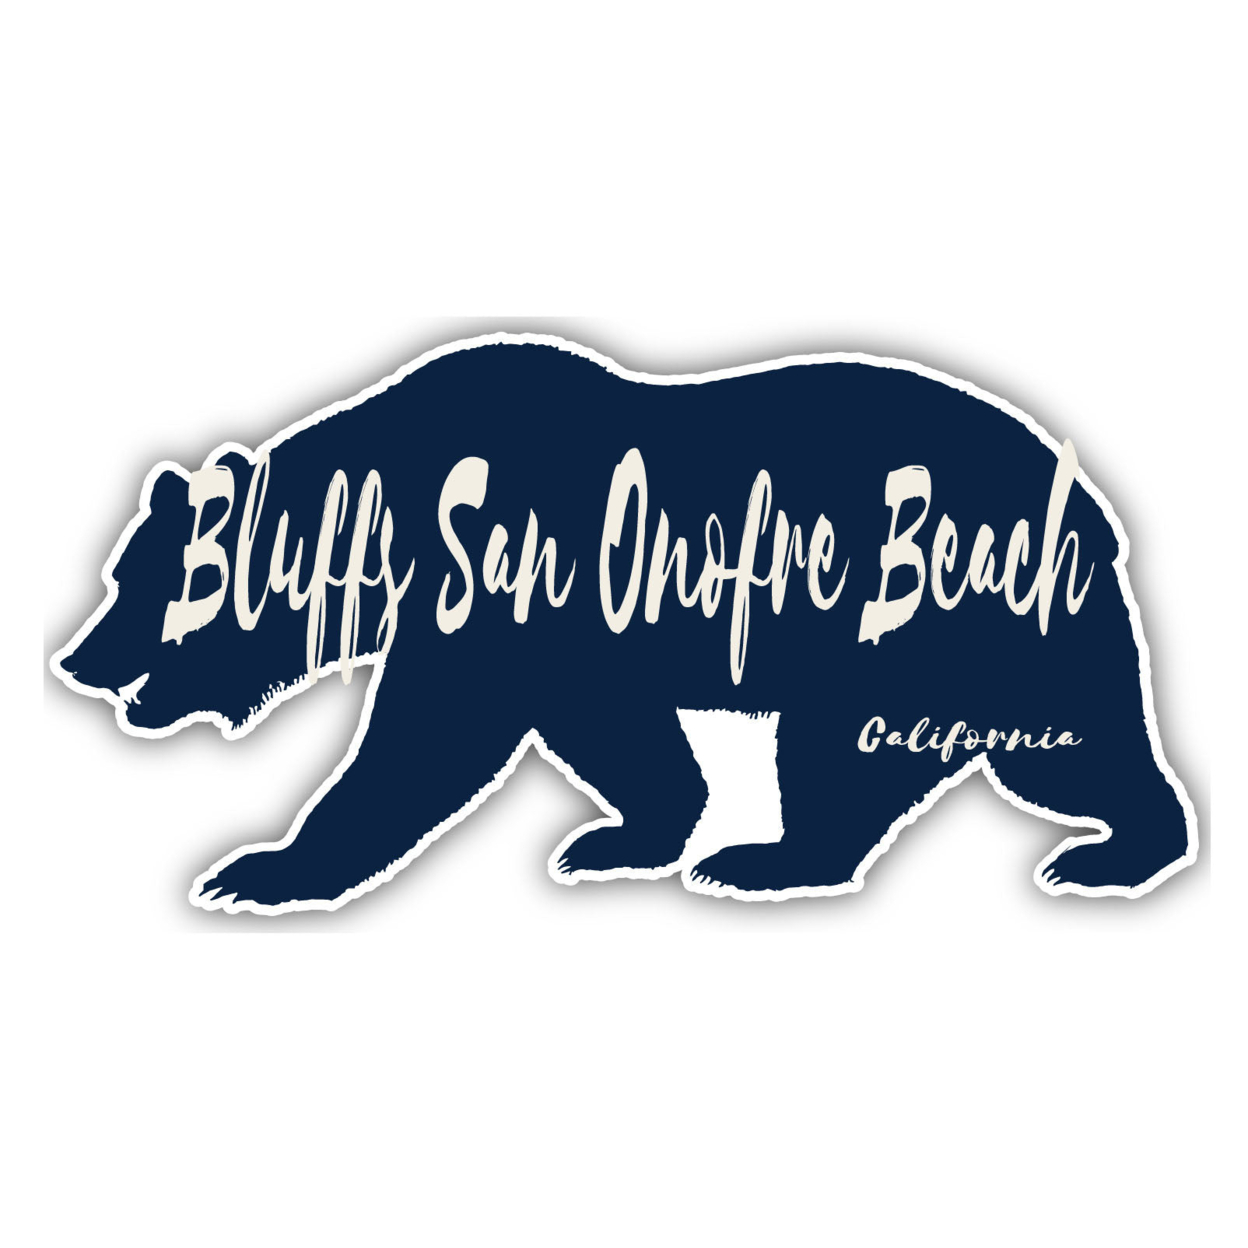 Bluffs San Onofre Beach California Souvenir Decorative Stickers (Choose Theme And Size) - Single Unit, 8-Inch, Bear